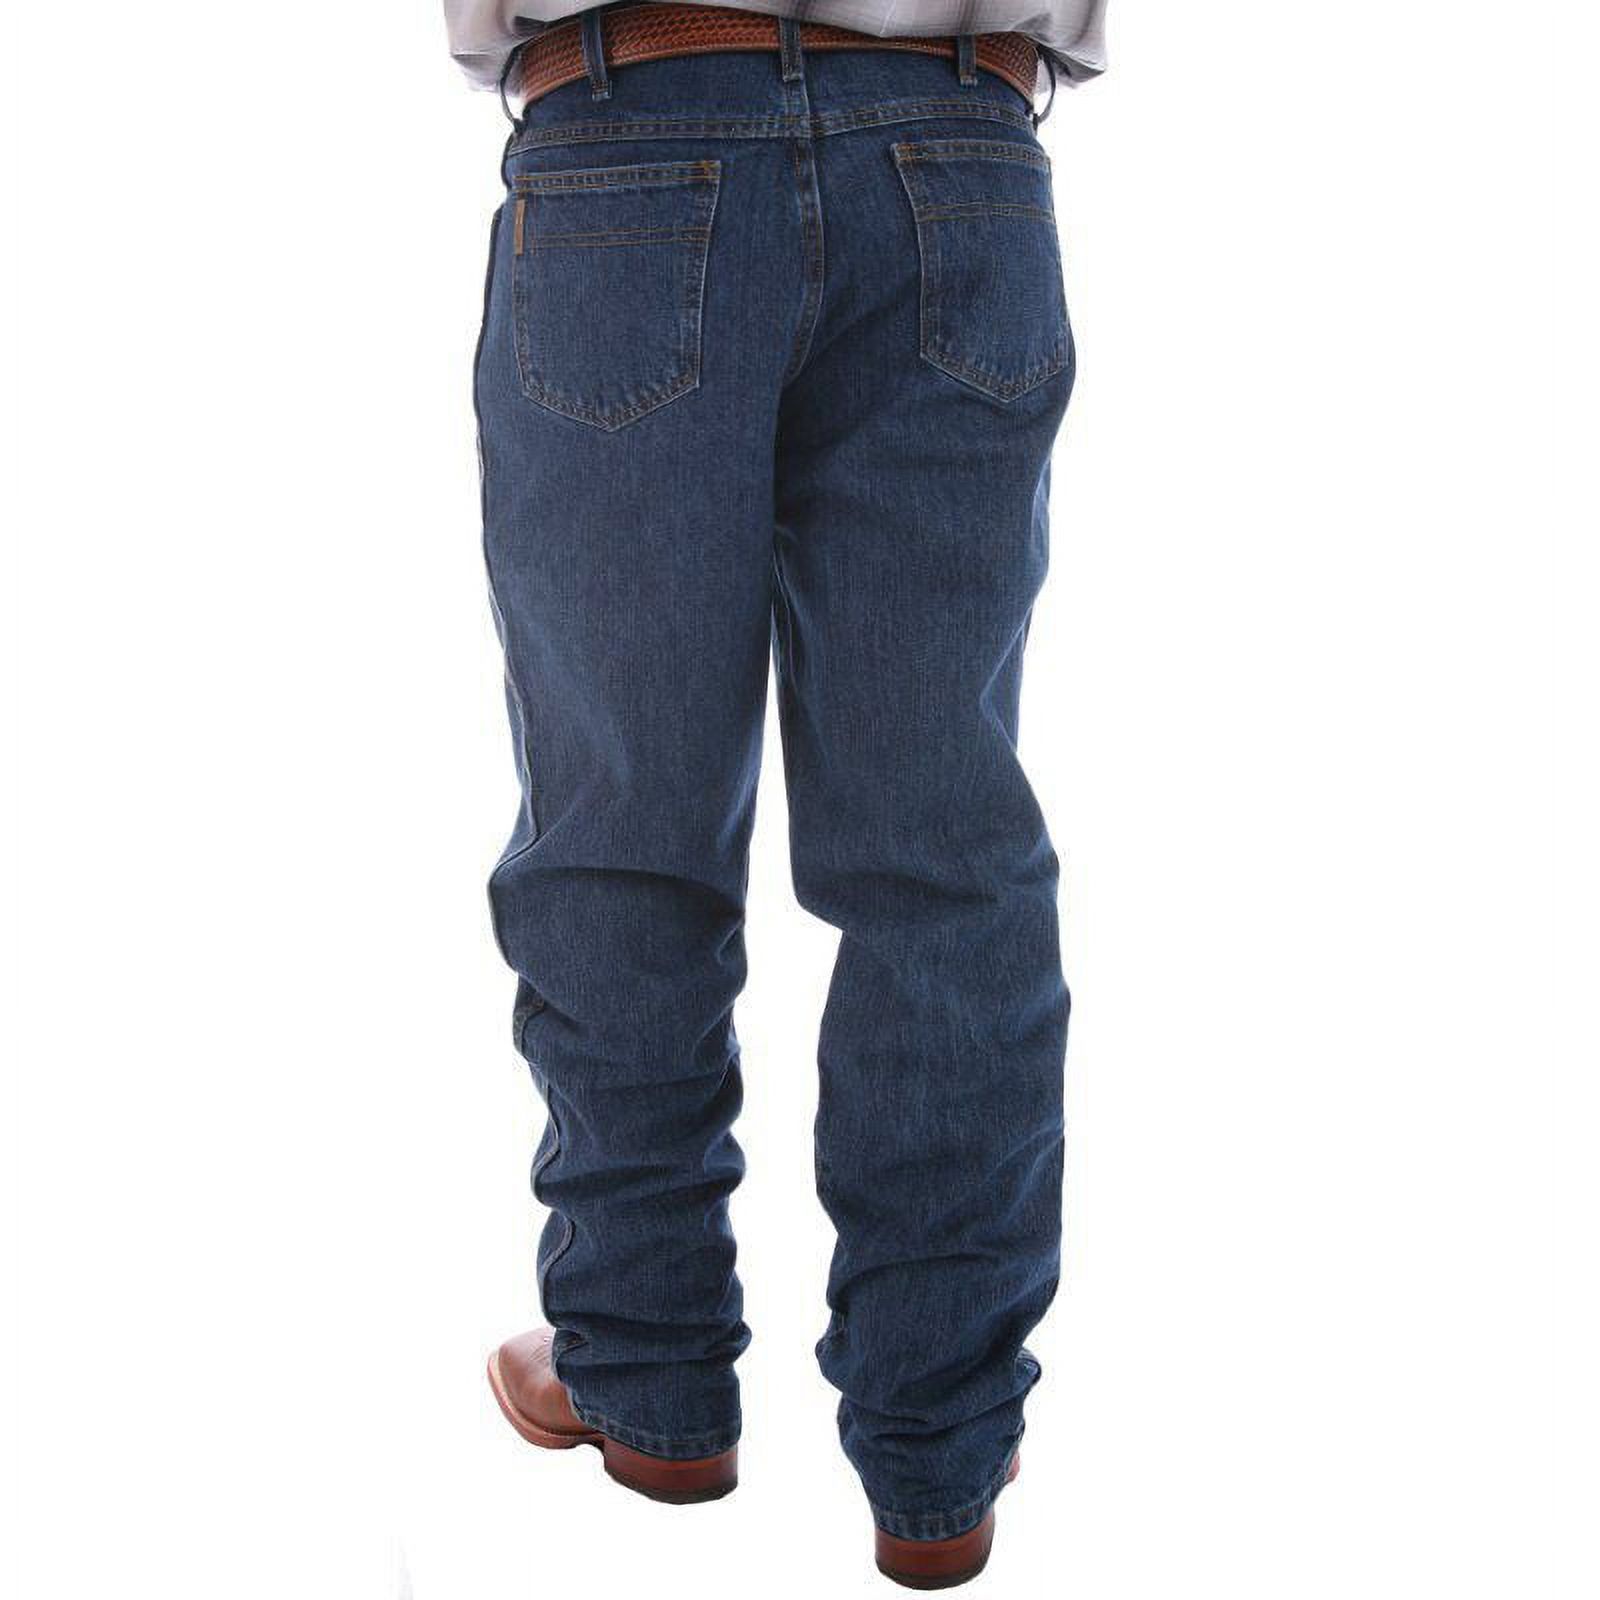 Cinch Apparel Mens Green Label Original Fit Jeans 44x36 Dark Stonewash - image 1 of 4